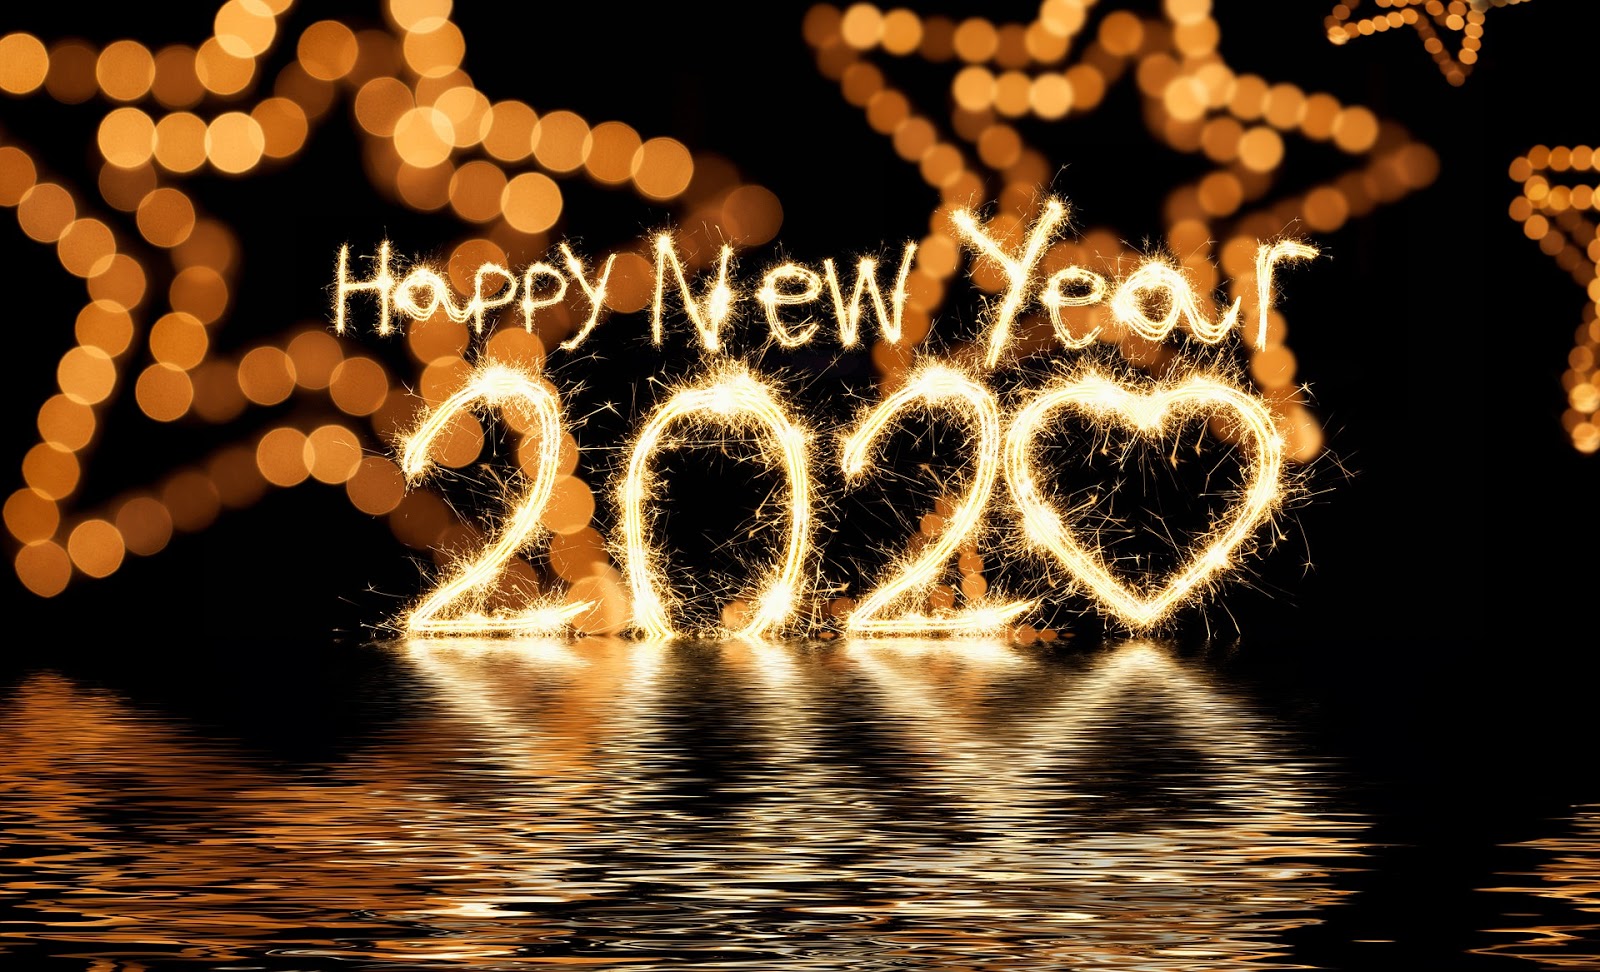 Happy new year wishes0.jpg